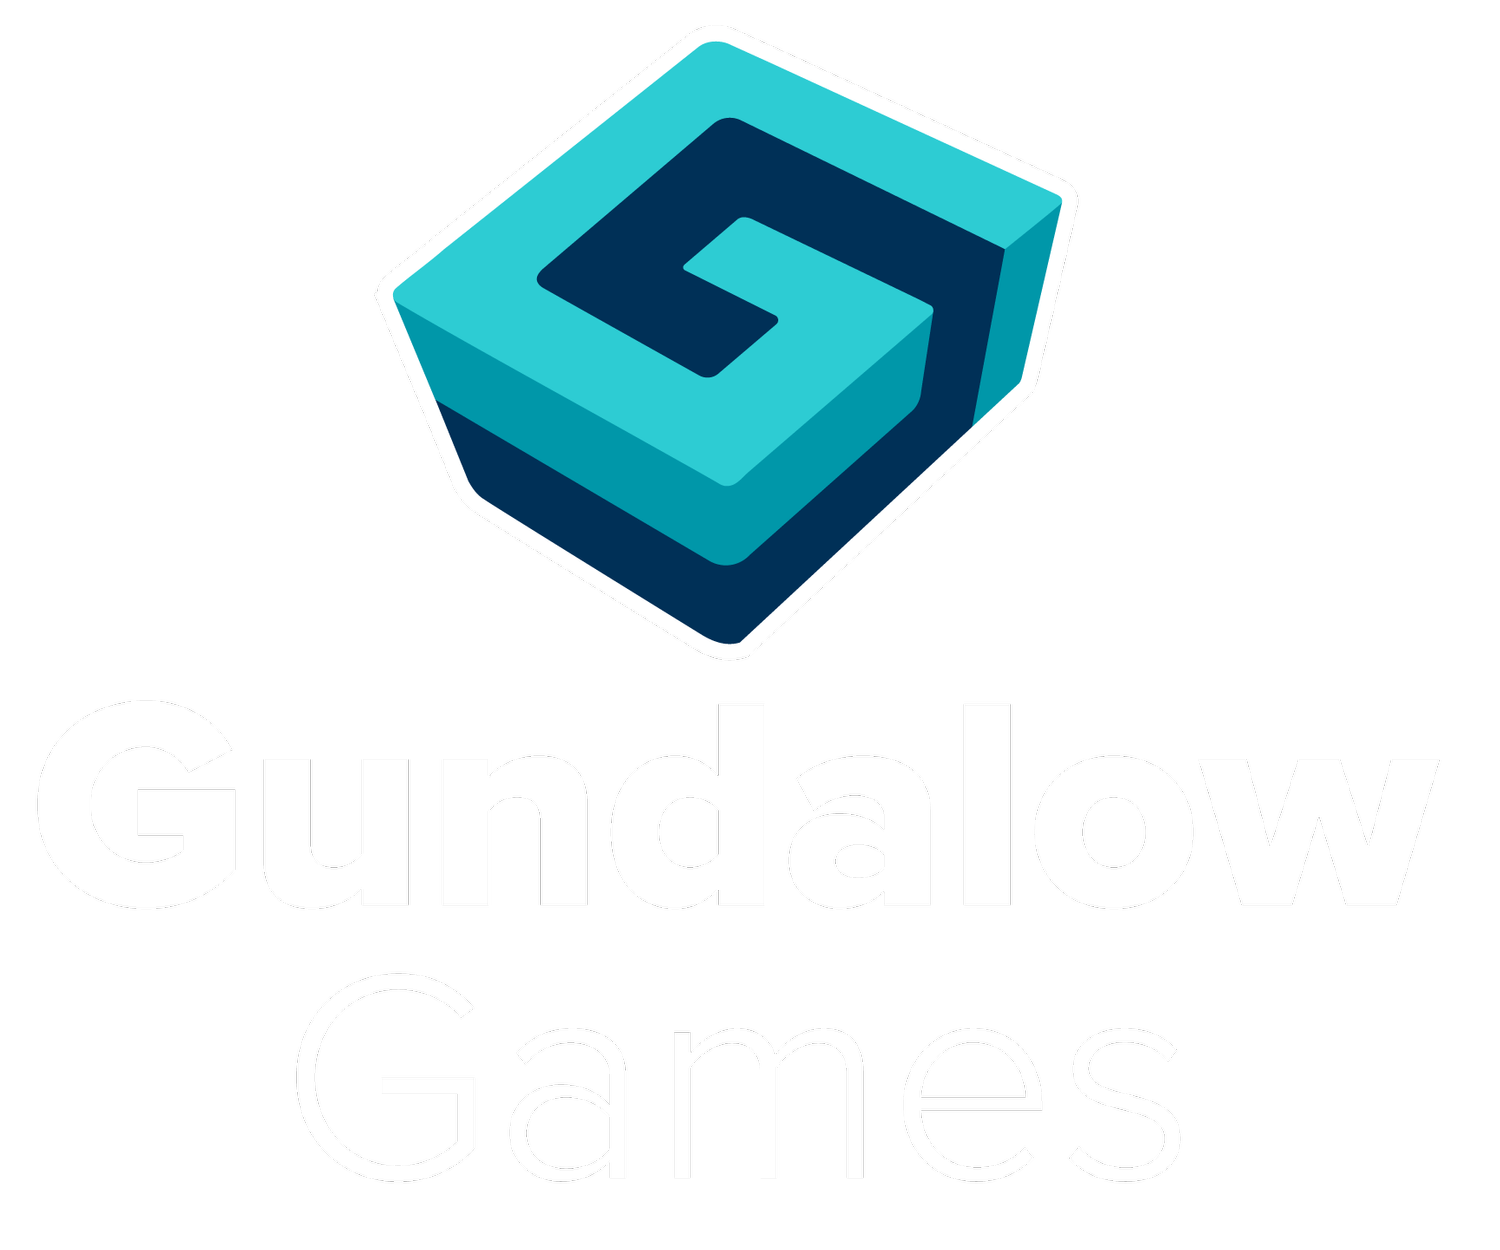 Gundalow Games - board game marketing, crowdfunding, events